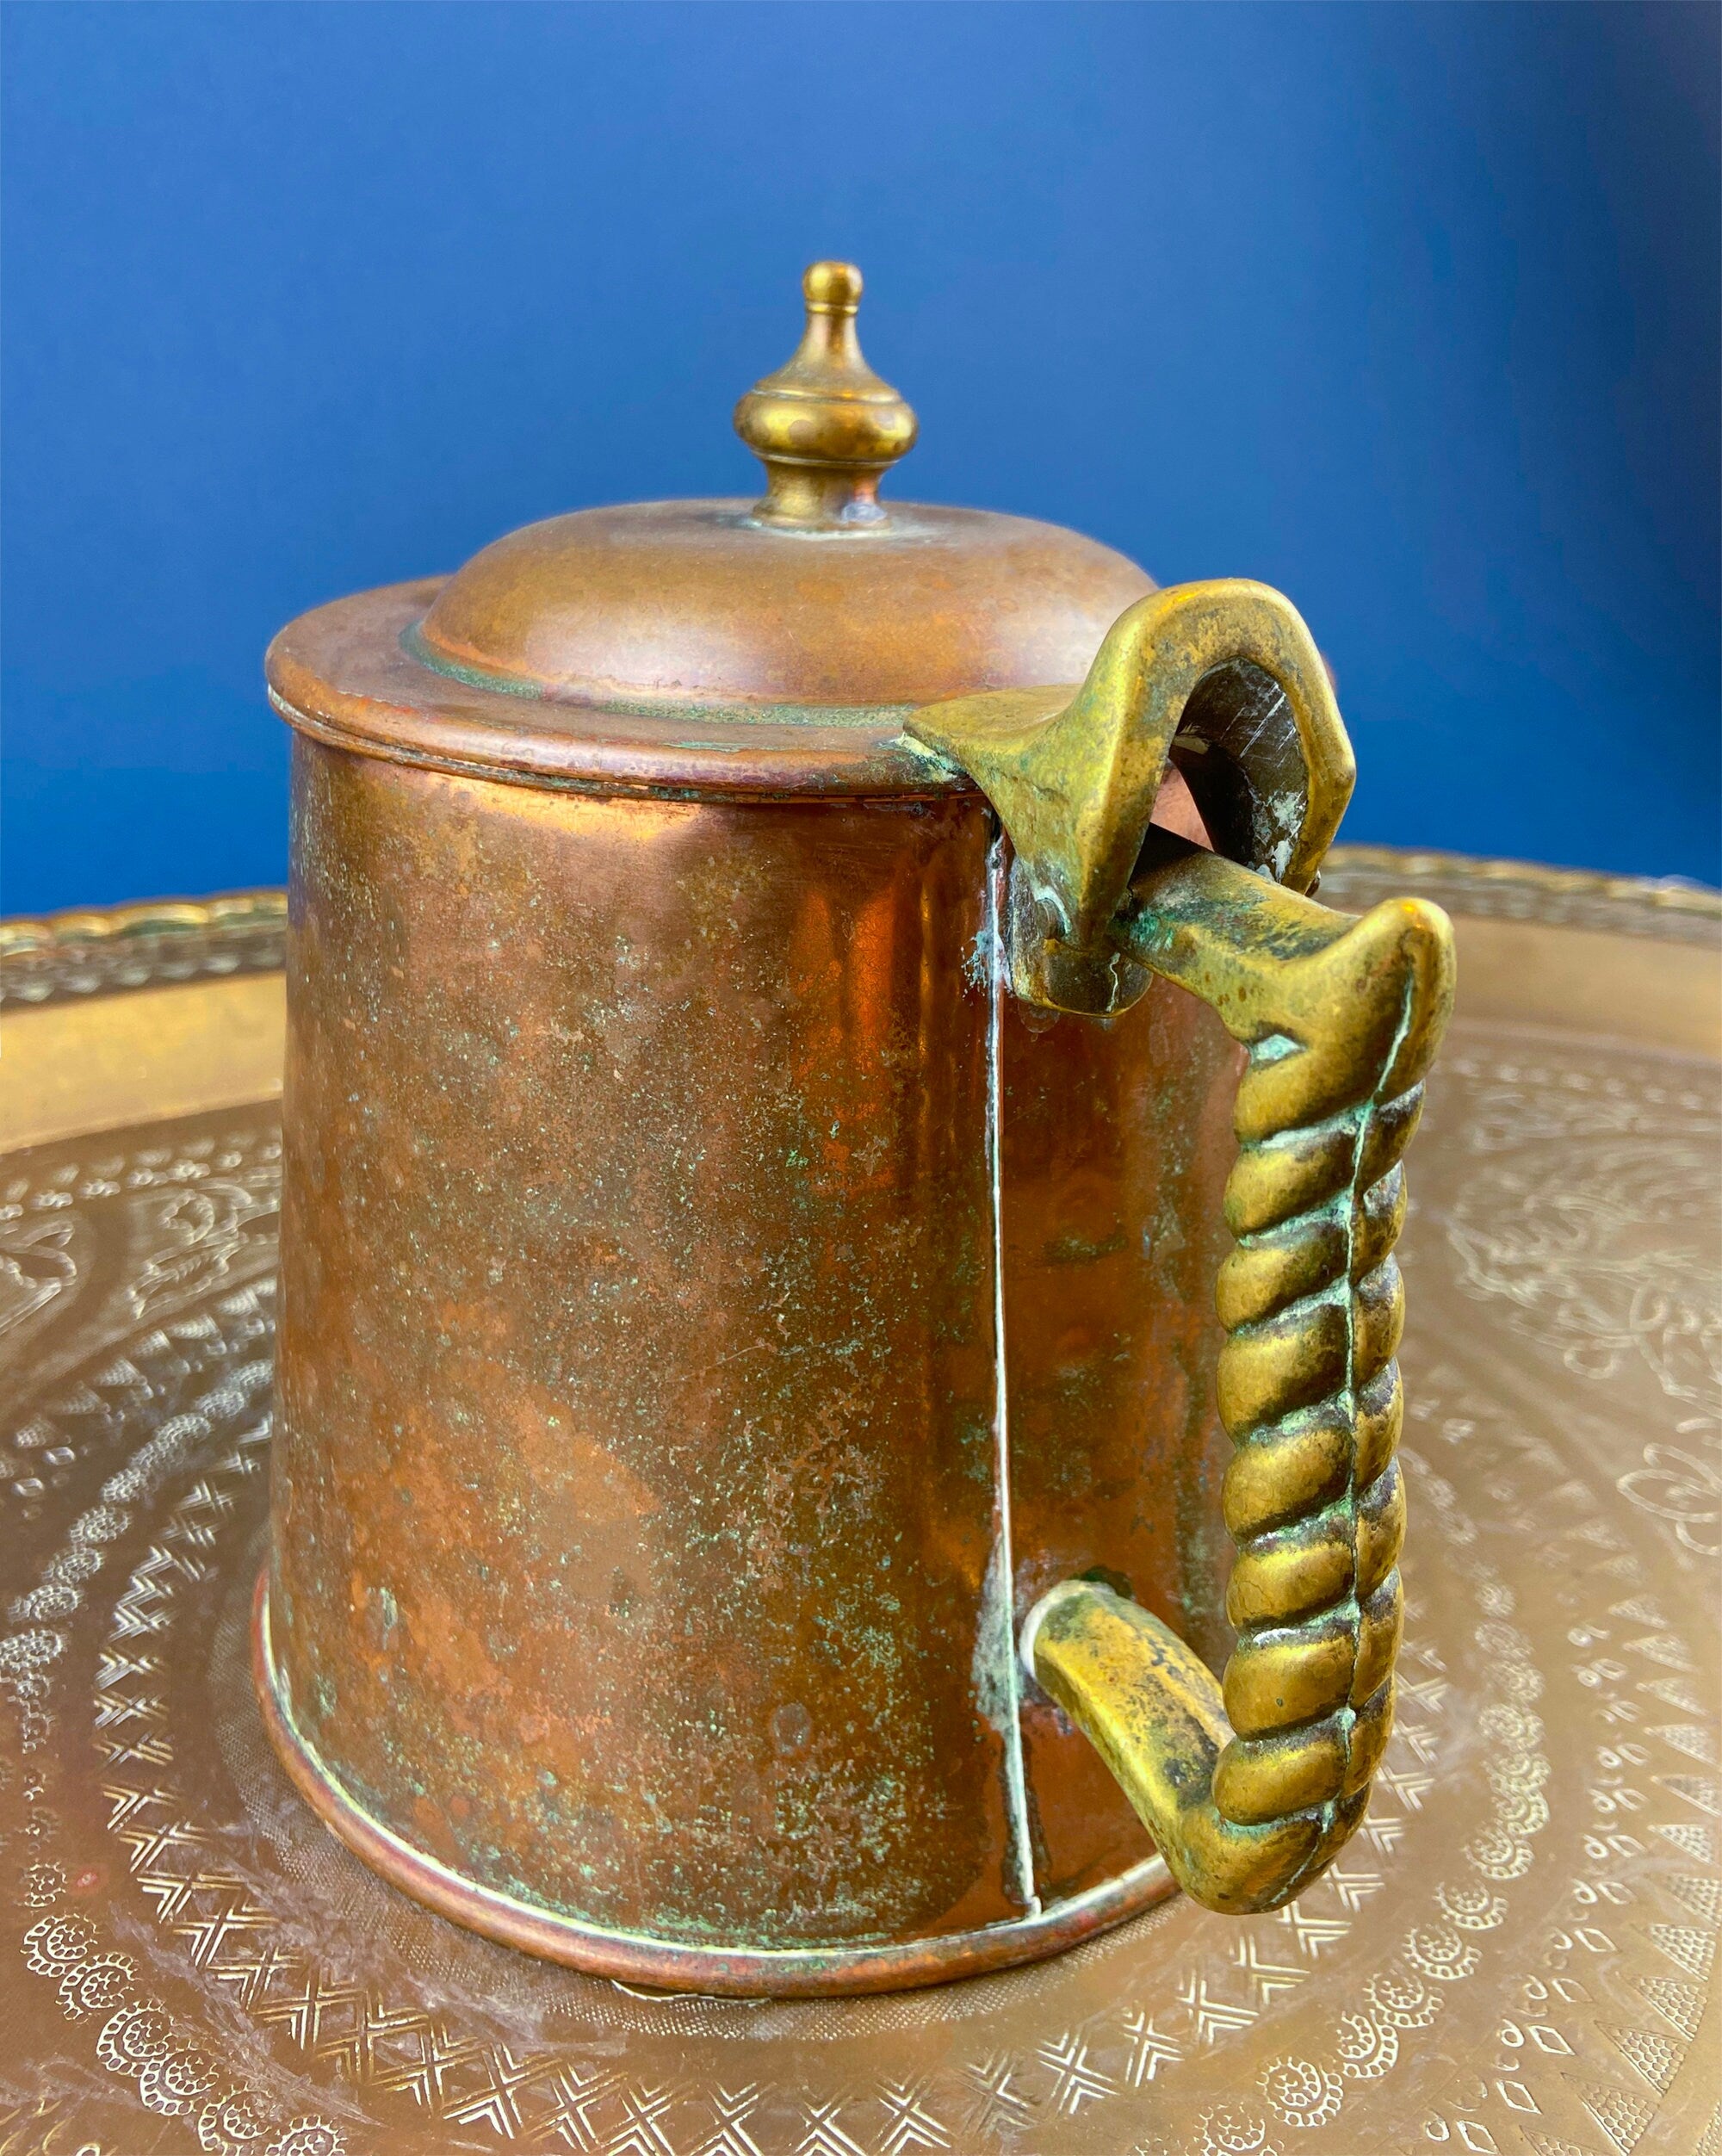 Sold at Auction: Large Antique Copper Bottom Civil War Camp Coffee Pot